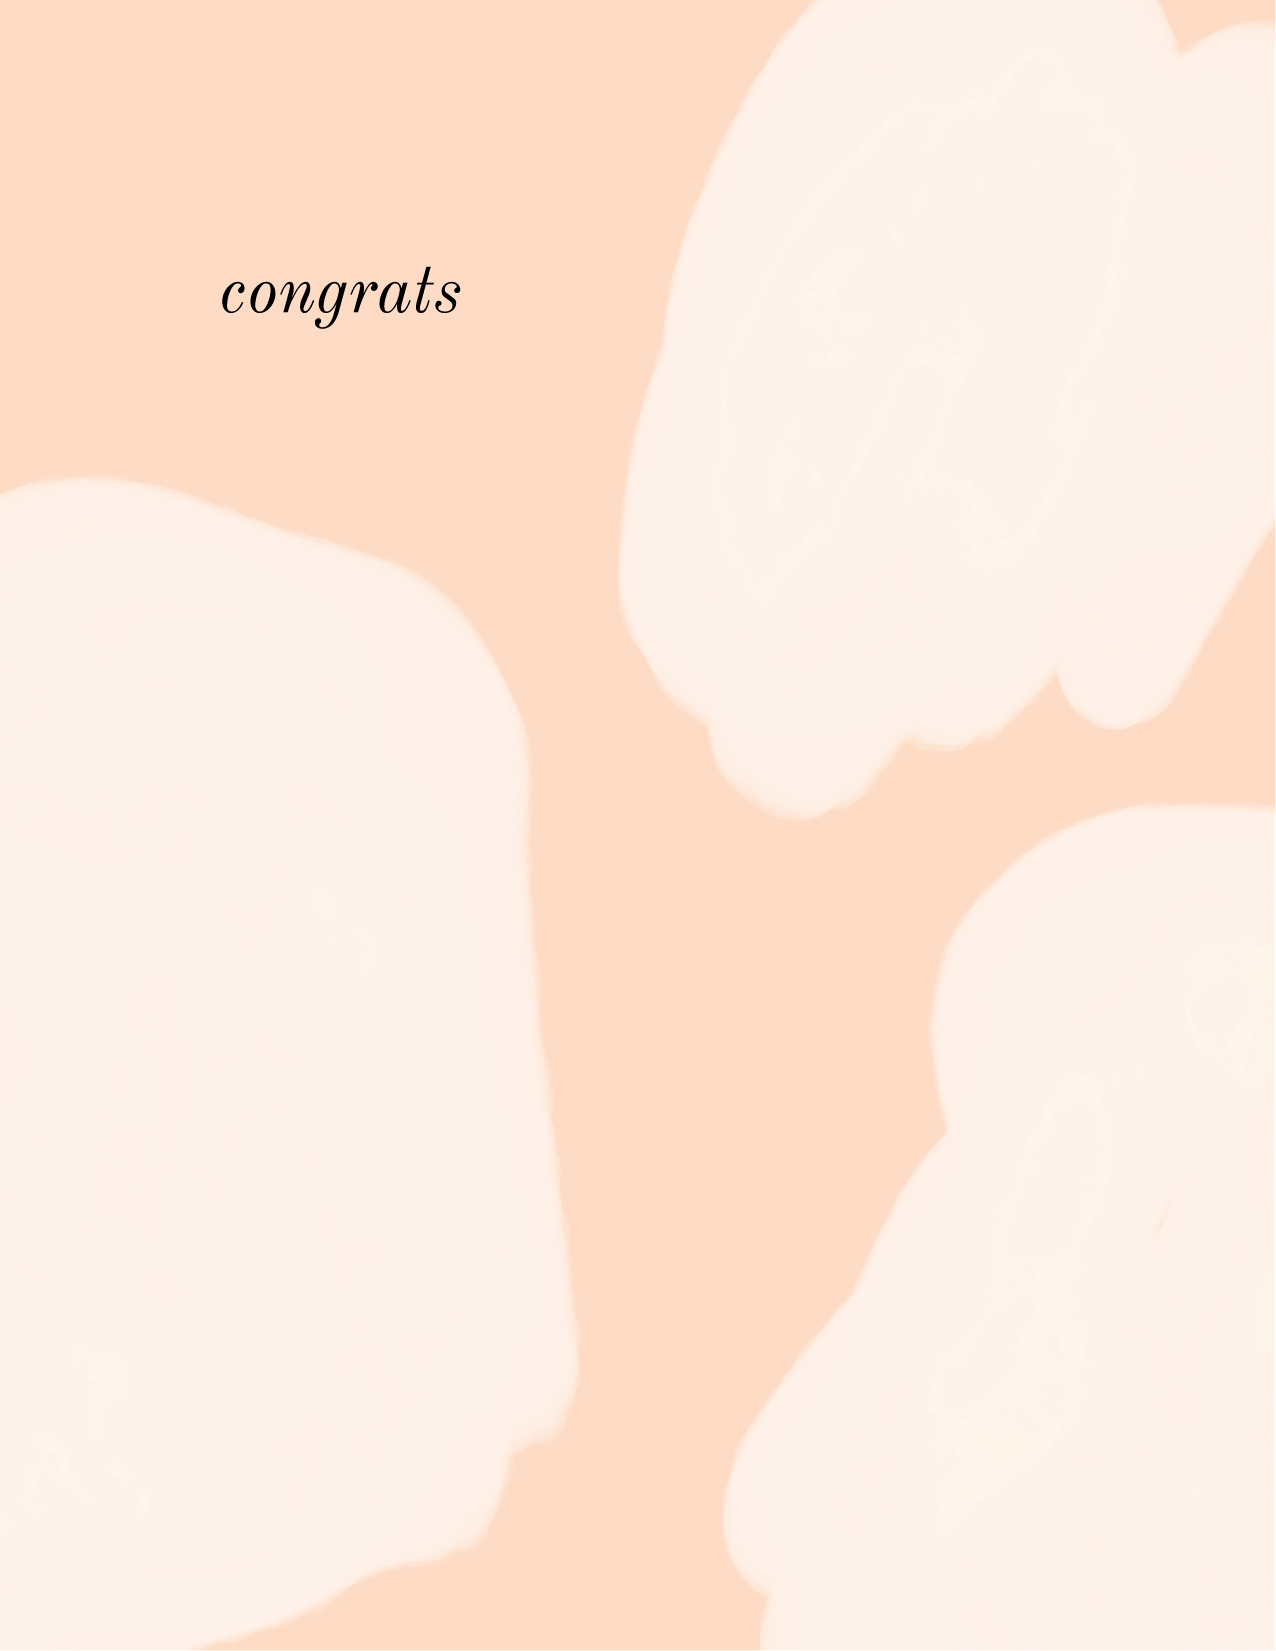 Abstract Congratulations Greeting Card